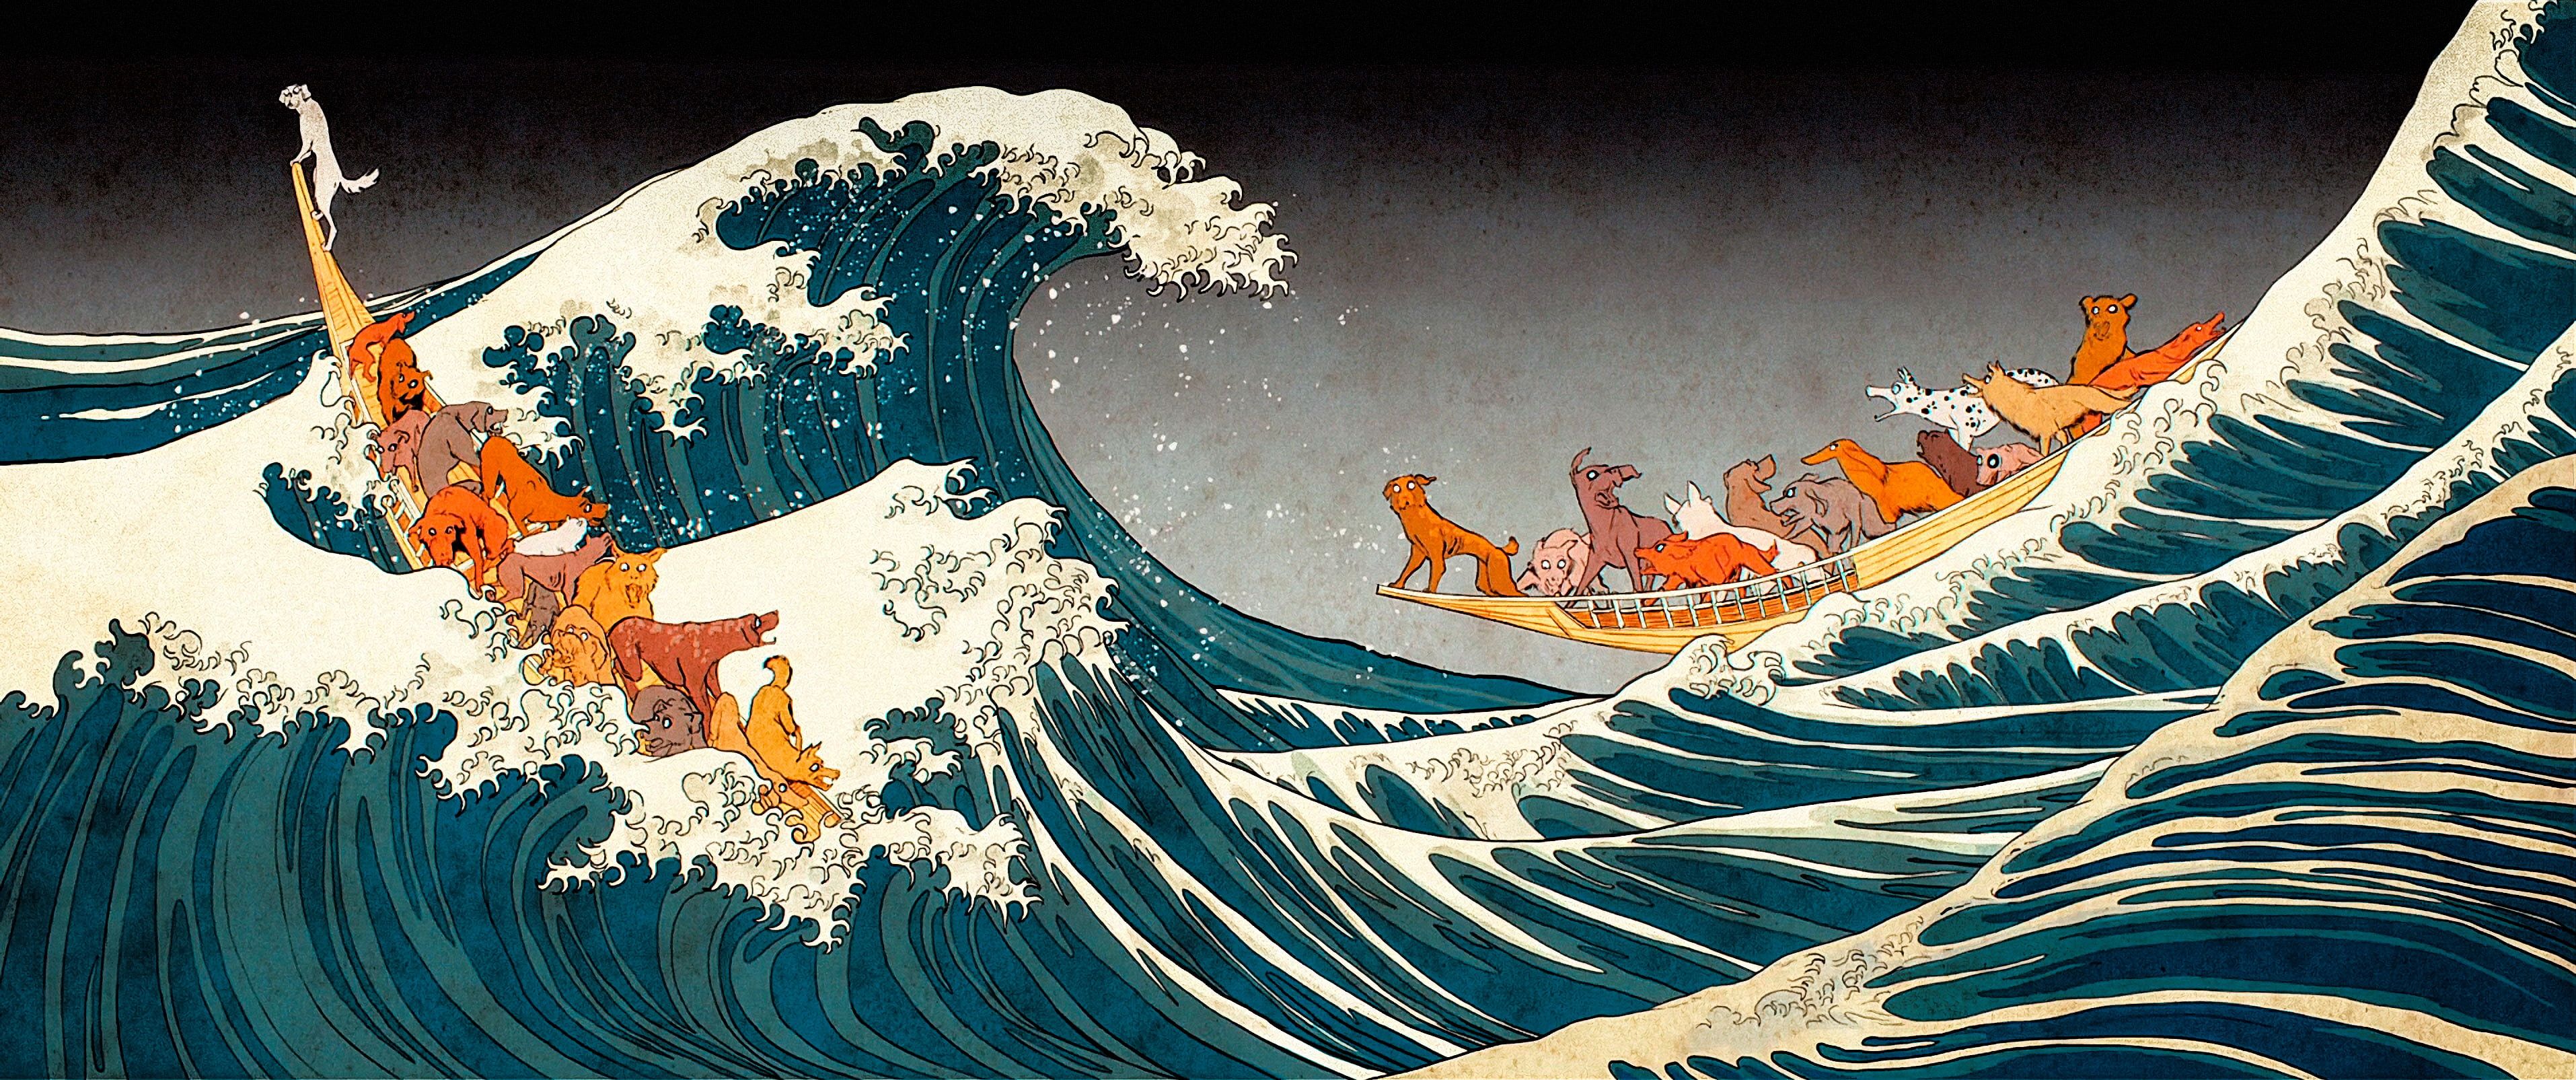 The Great Wave of Kanagawa by Hokusai painting, Isle of Dogs